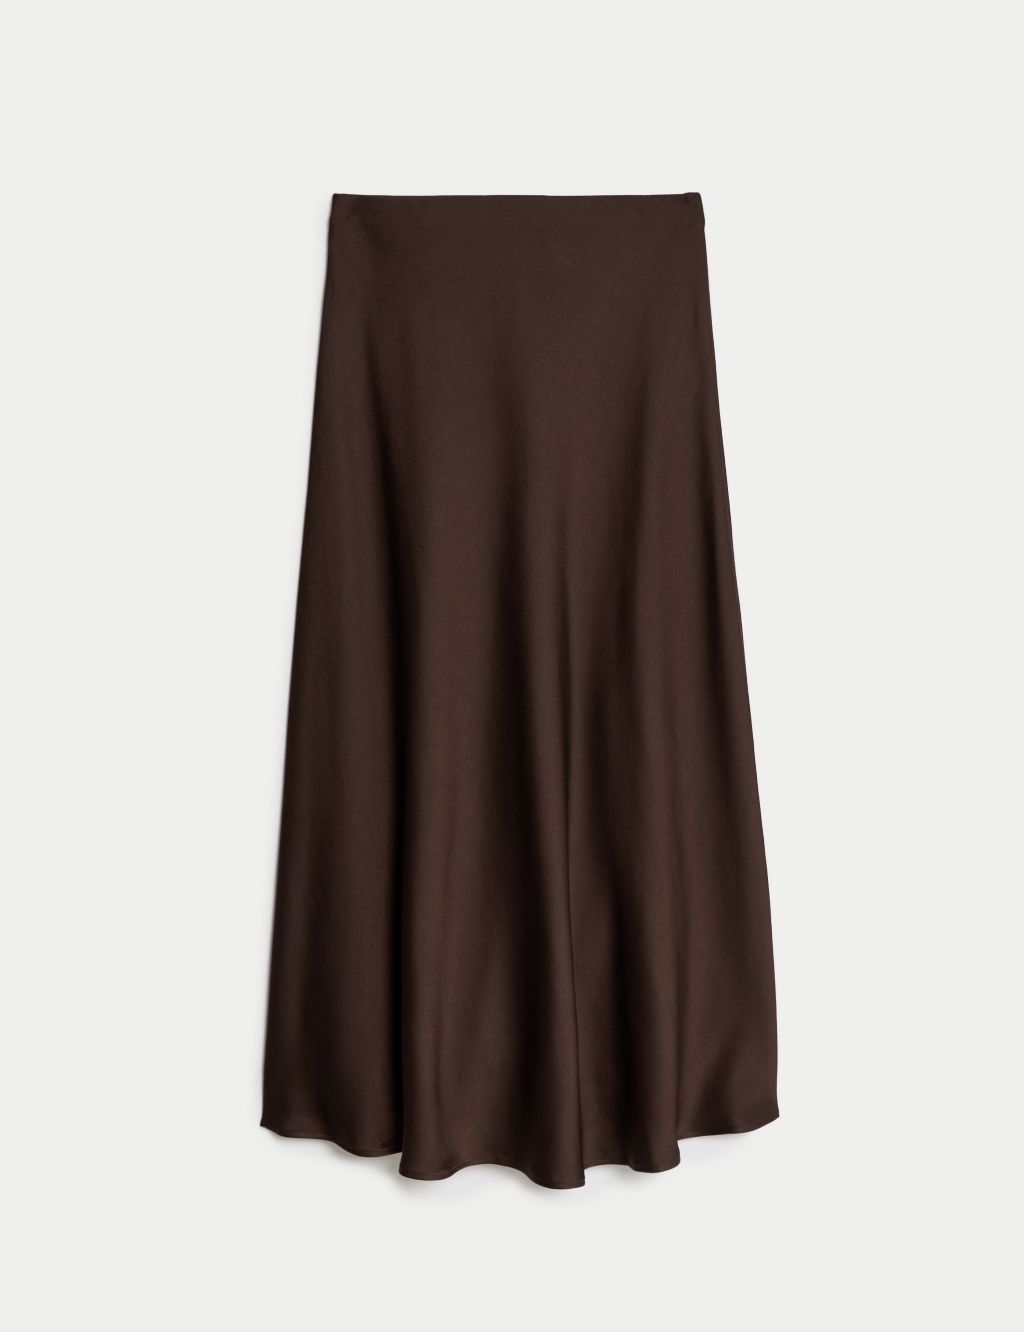 Satin Midaxi Slip Skirt image 2